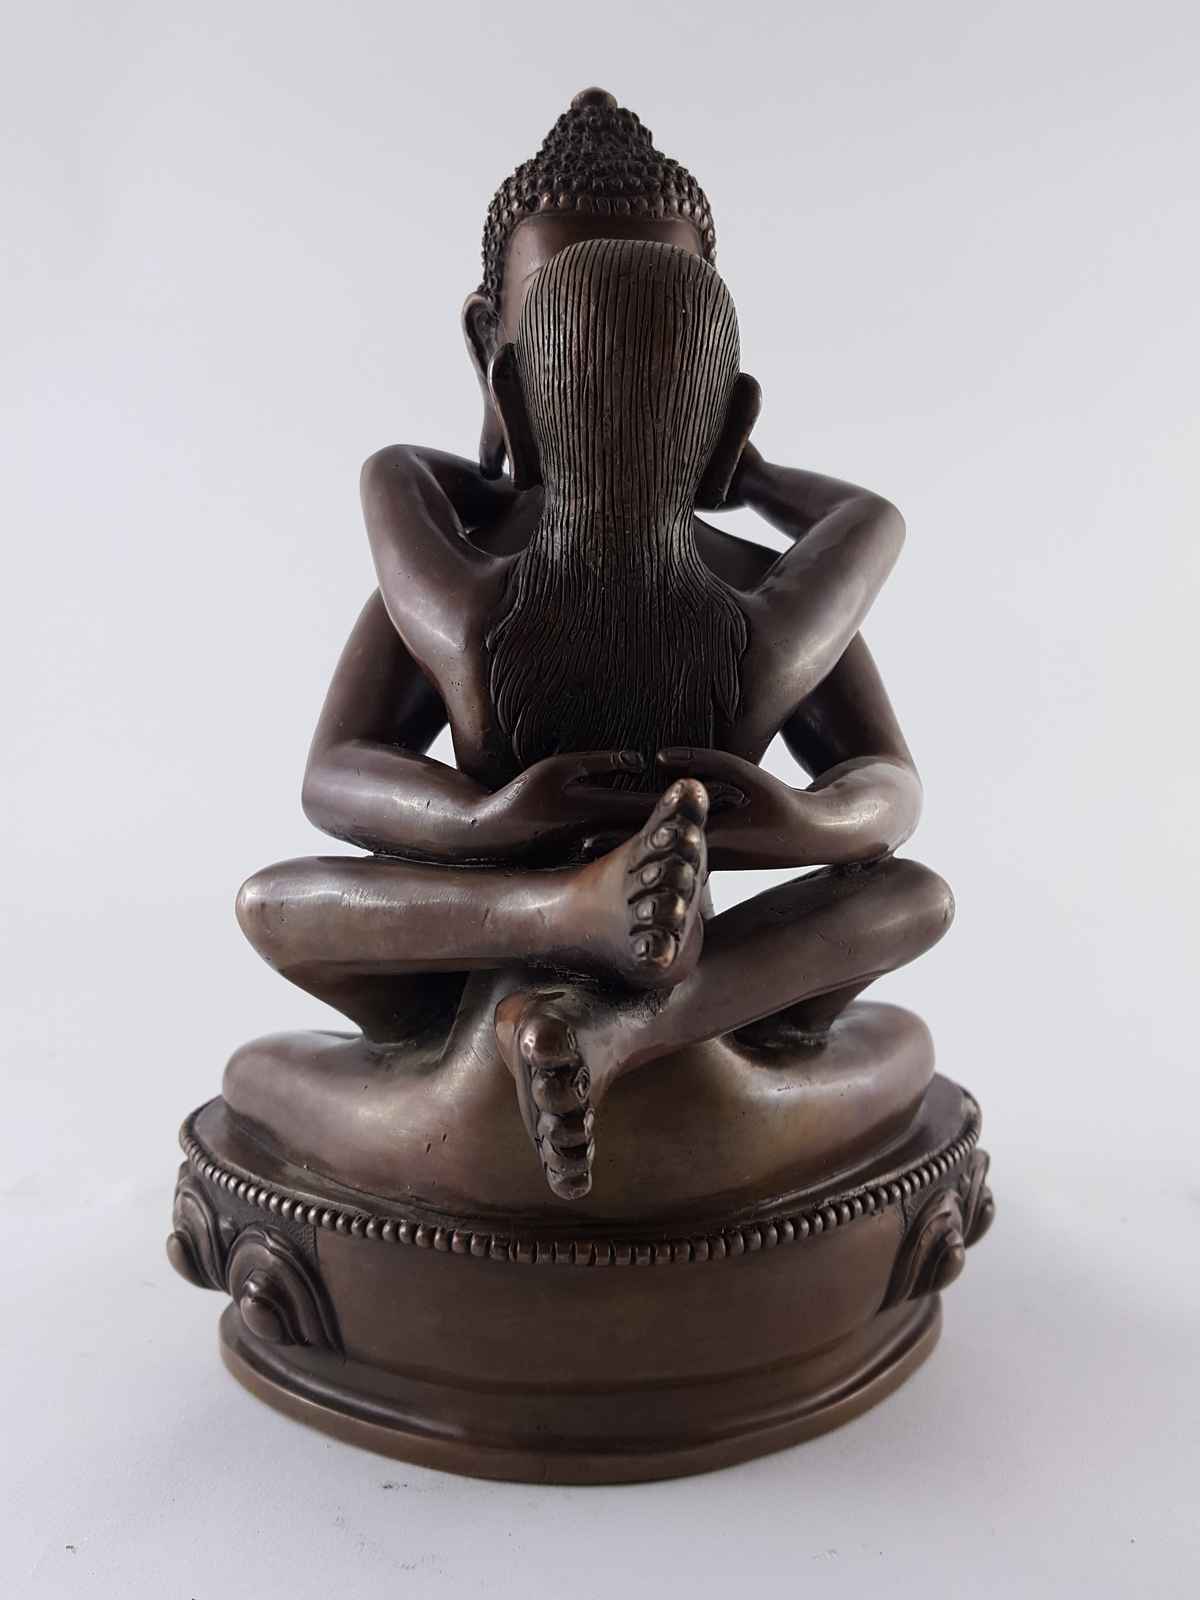 Yang - Ying Reverse Samantabhadra Statue master Quality, unique, rare Find, oxidized